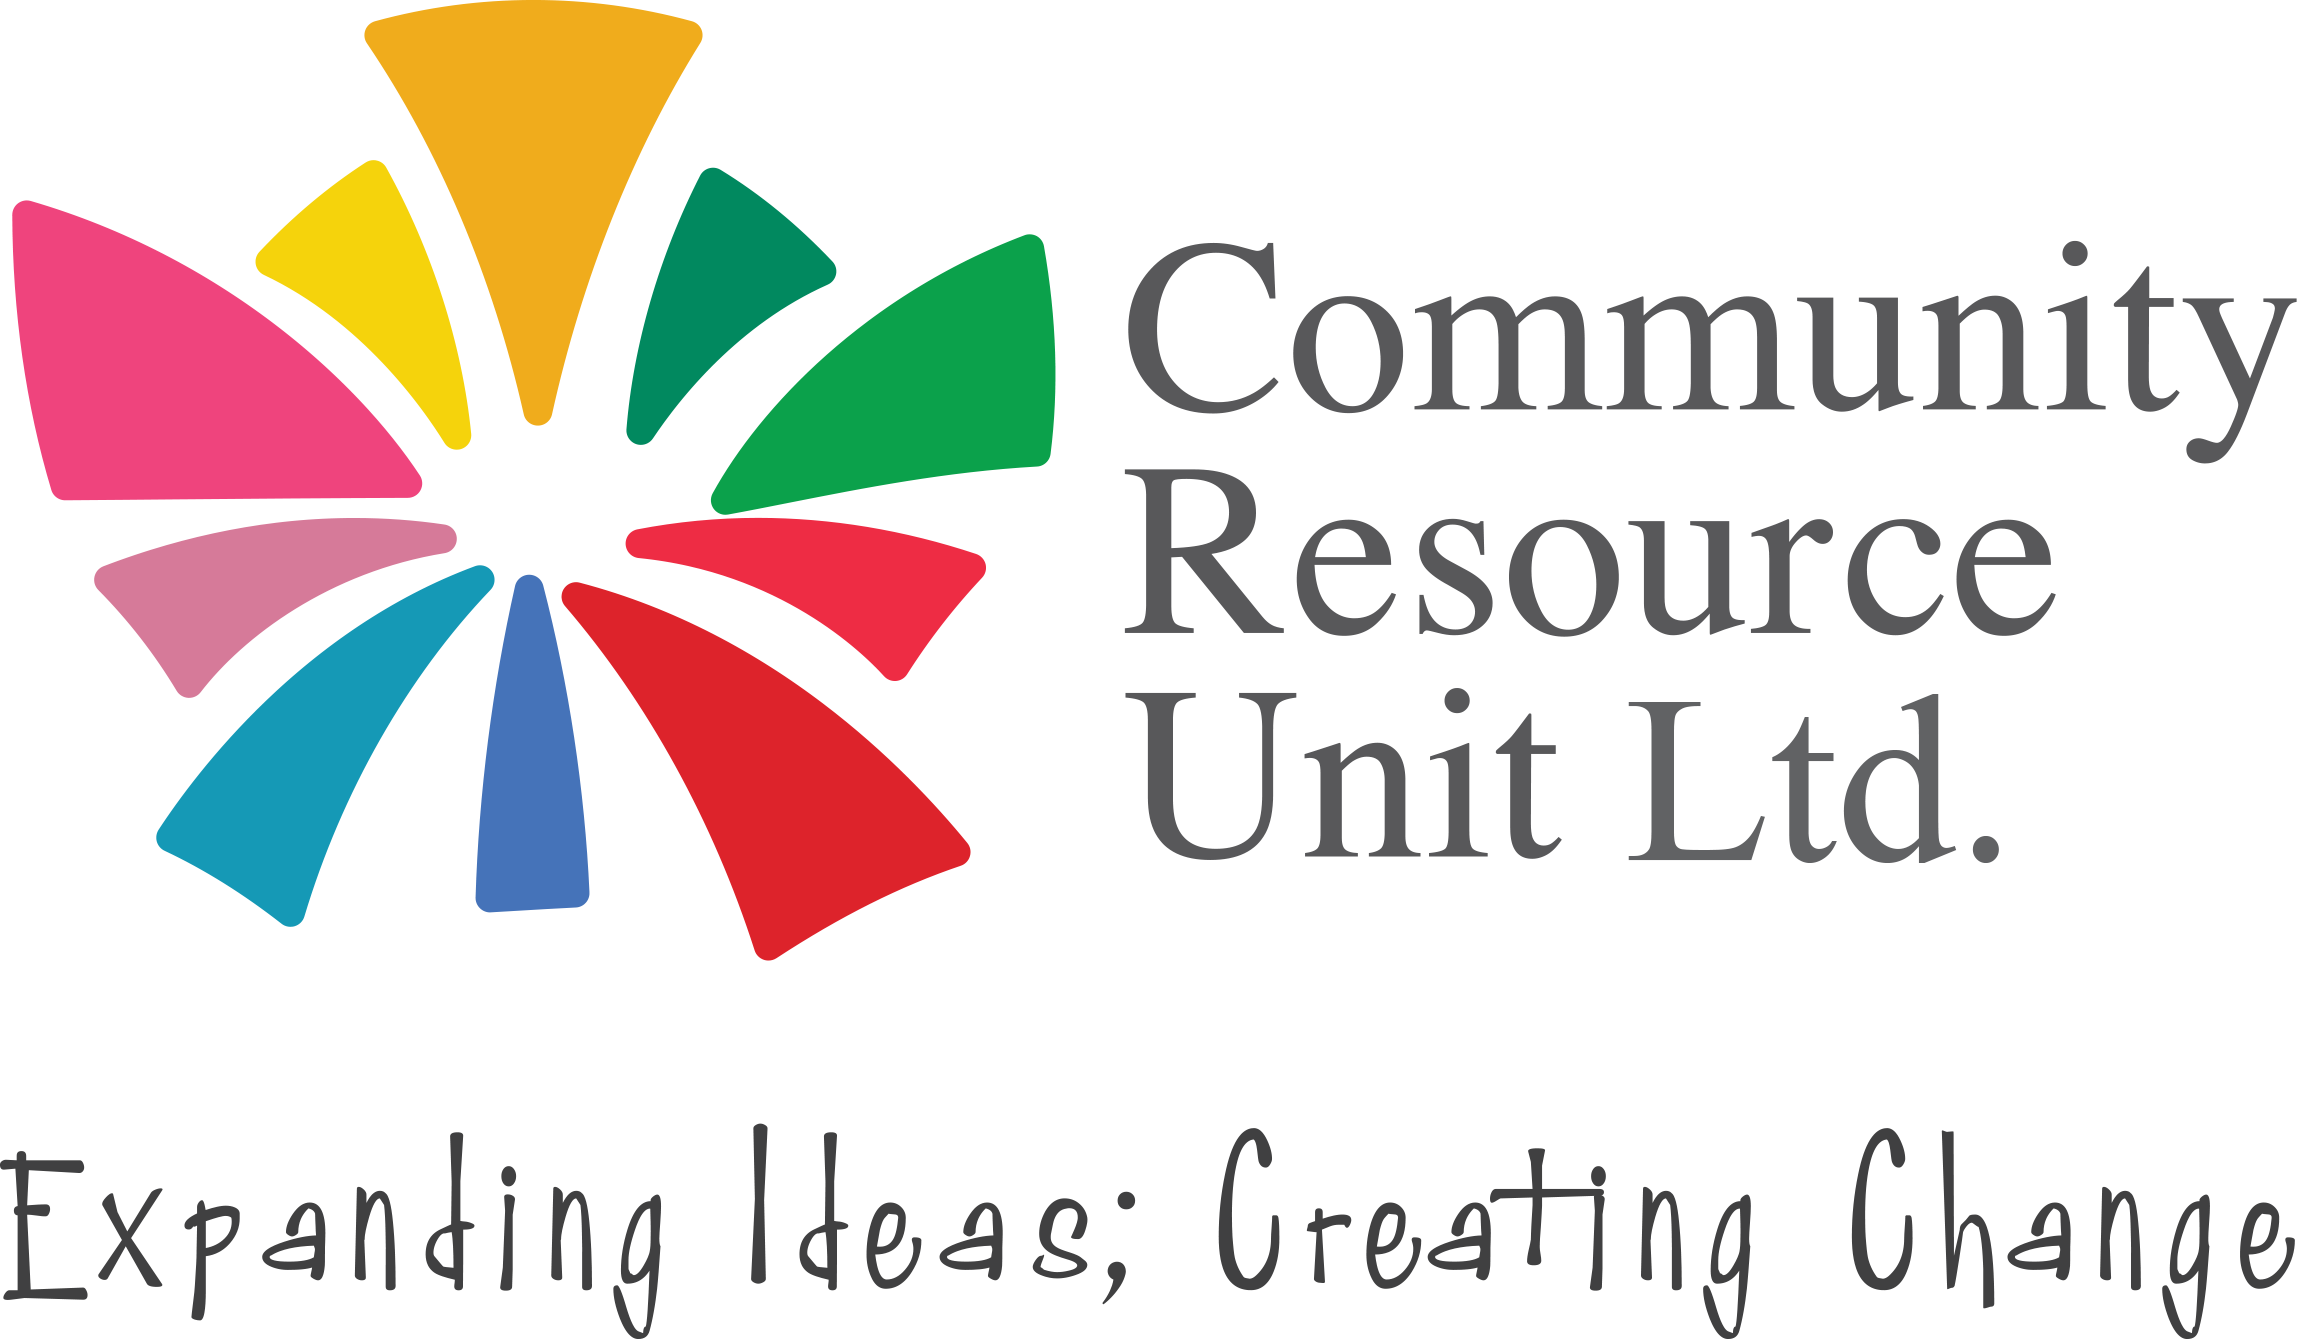 Cru Community Resource Unit Ltd